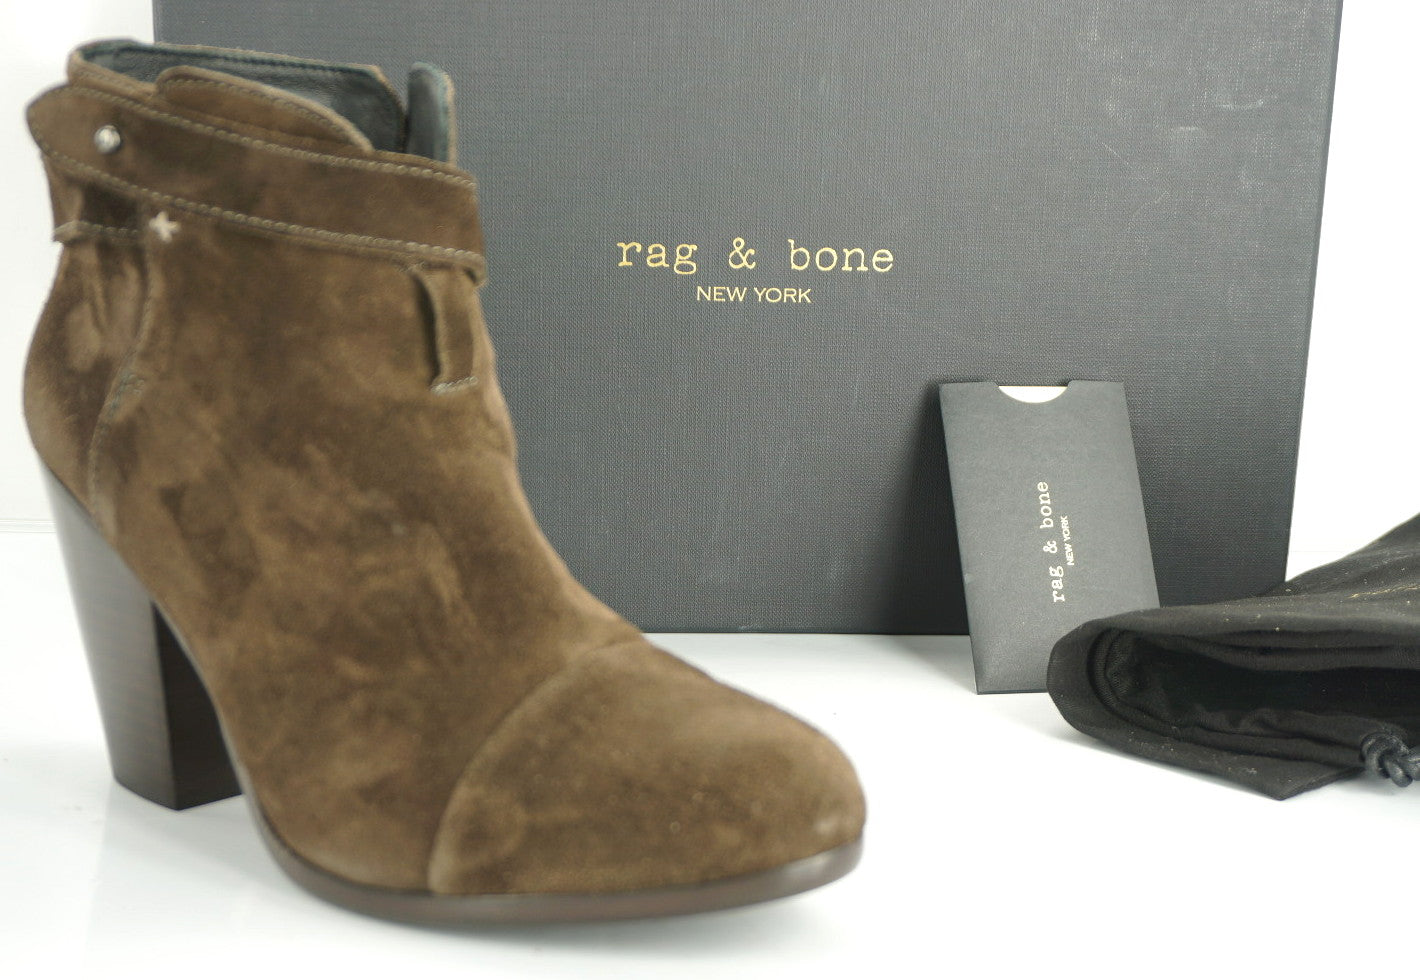 Rag & Bone Brown Suede Harrow Strappy Block Heel Ankle Boots Size 37.5 $495 NIB